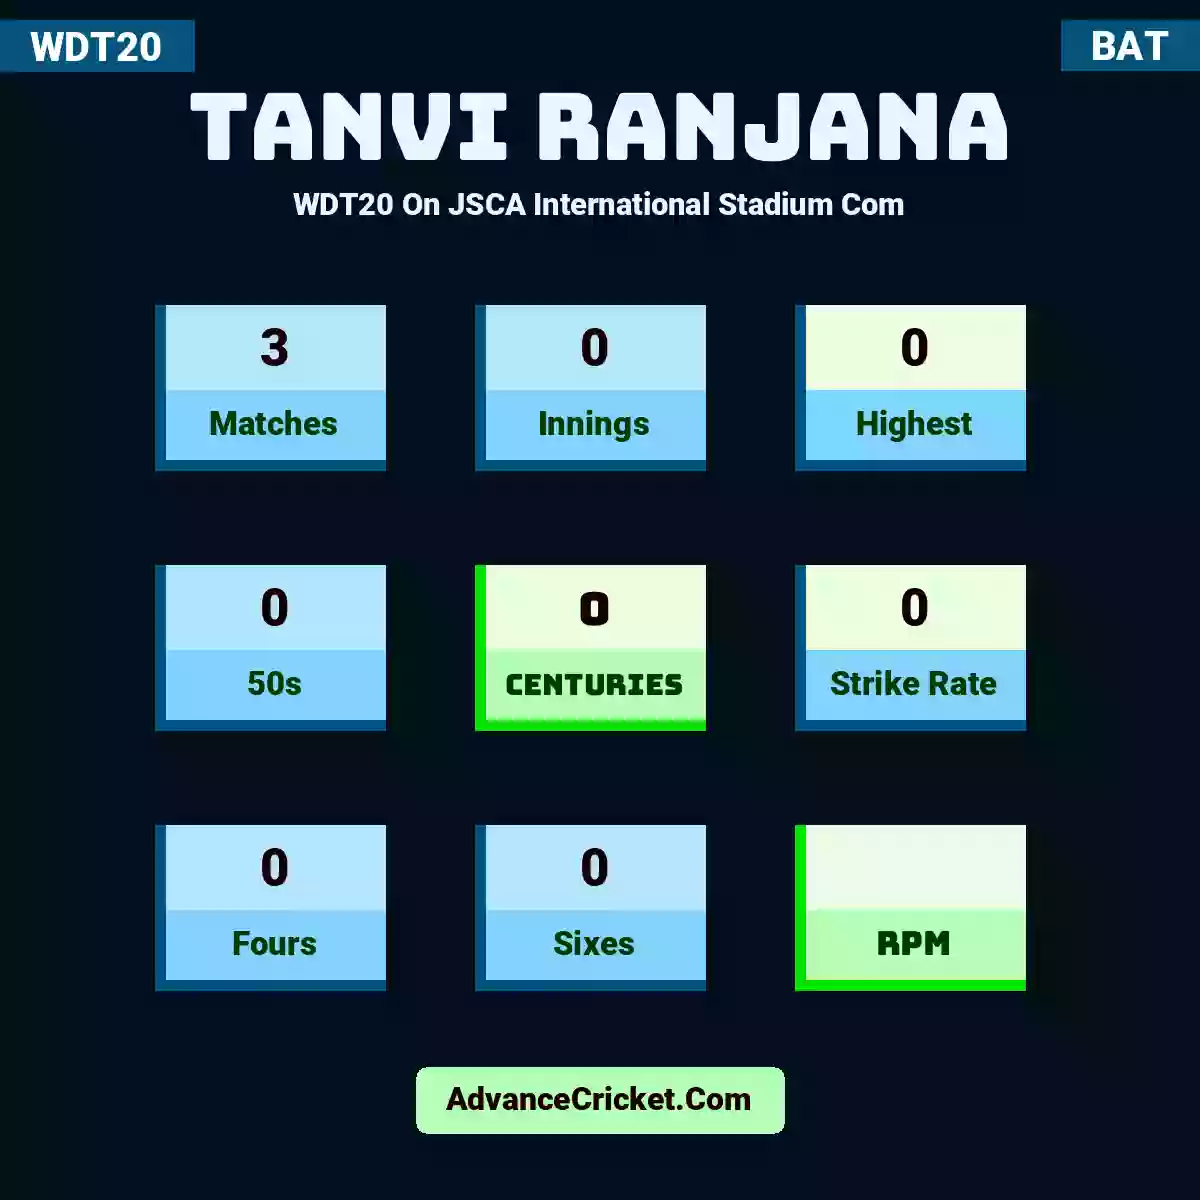 Tanvi Ranjana WDT20  On JSCA International Stadium Com, Tanvi Ranjana played 3 matches, scored 0 runs as highest, 0 half-centuries, and 0 centuries, with a strike rate of 0. T.Ranjana hit 0 fours and 0 sixes.